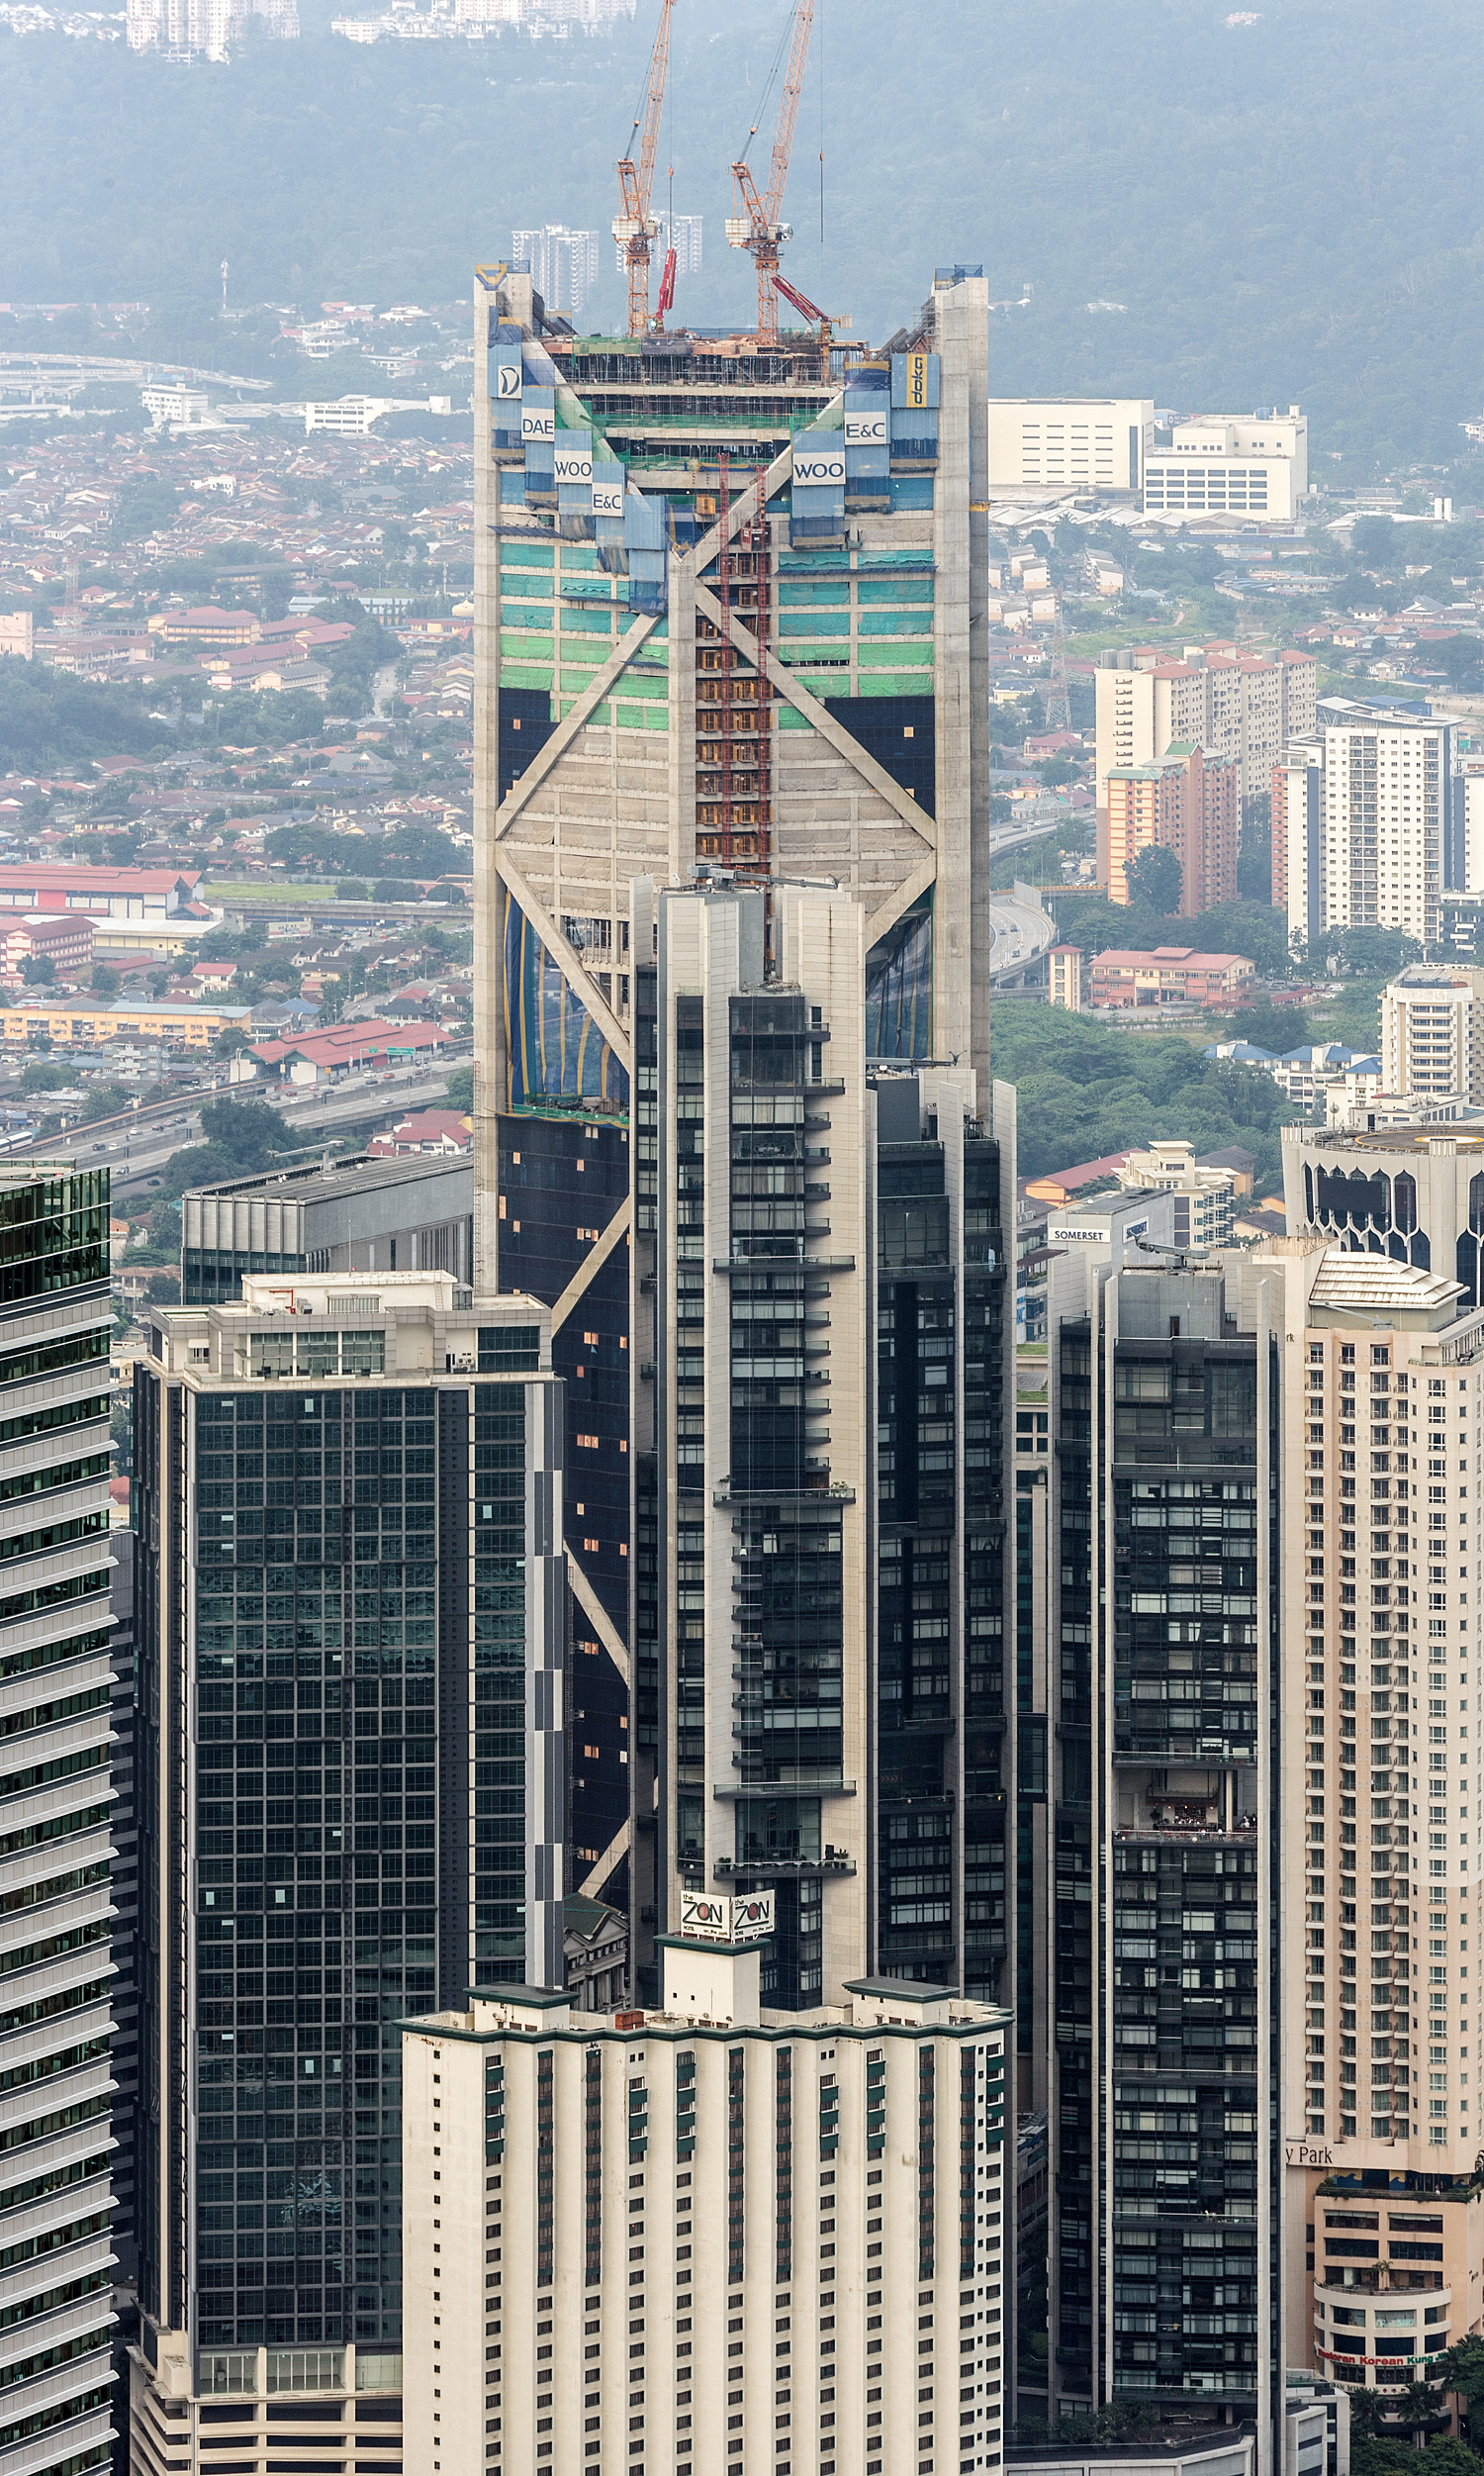 Ilham Tower - Under construction 